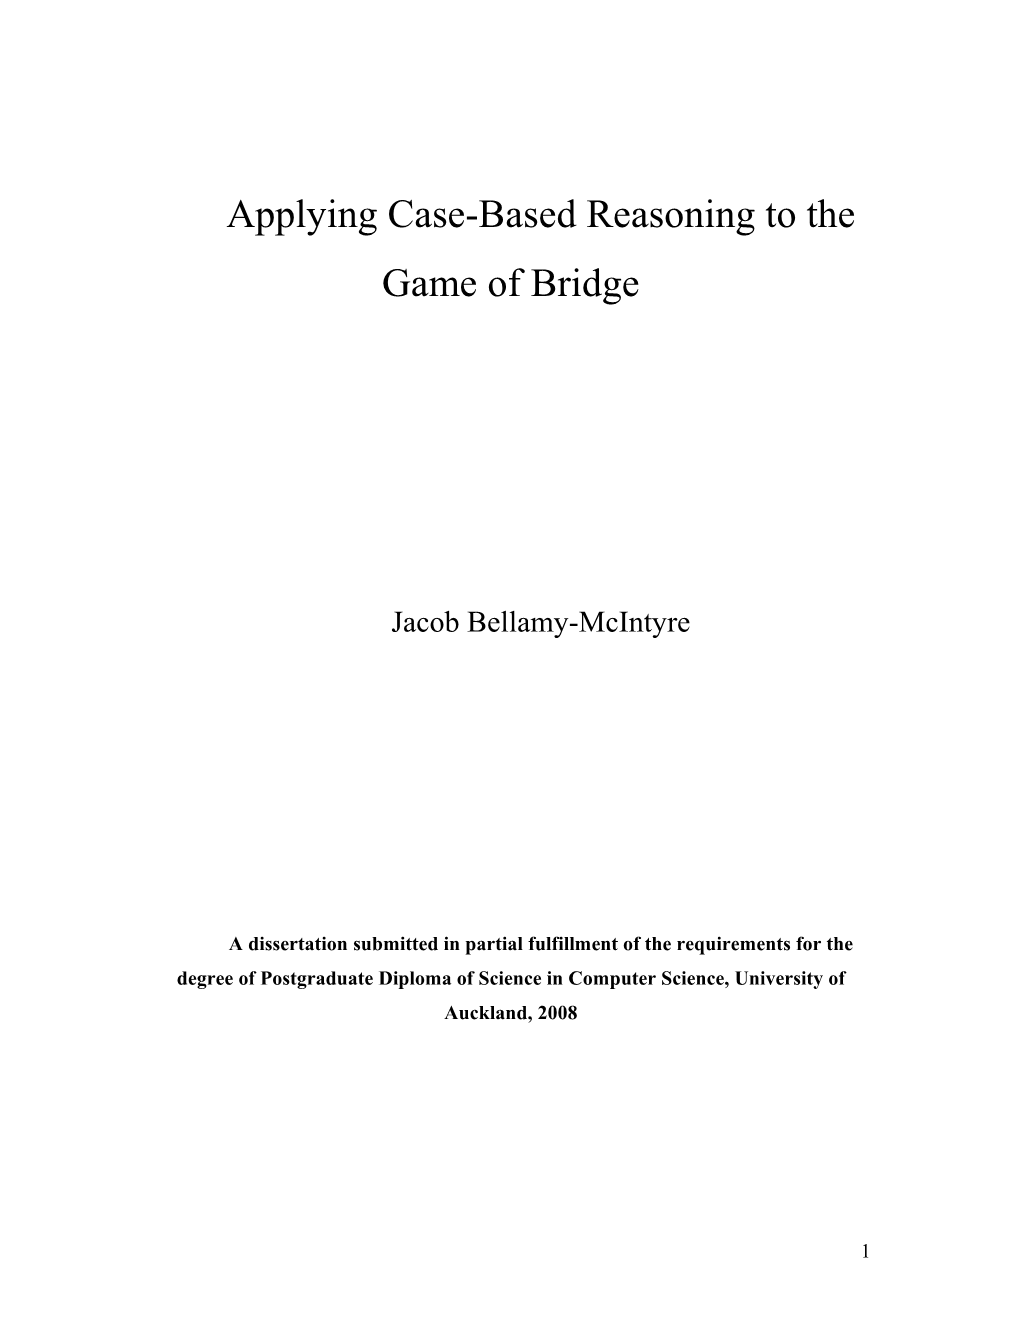 Applying Case-Based Reasoning to the Game of Bridge